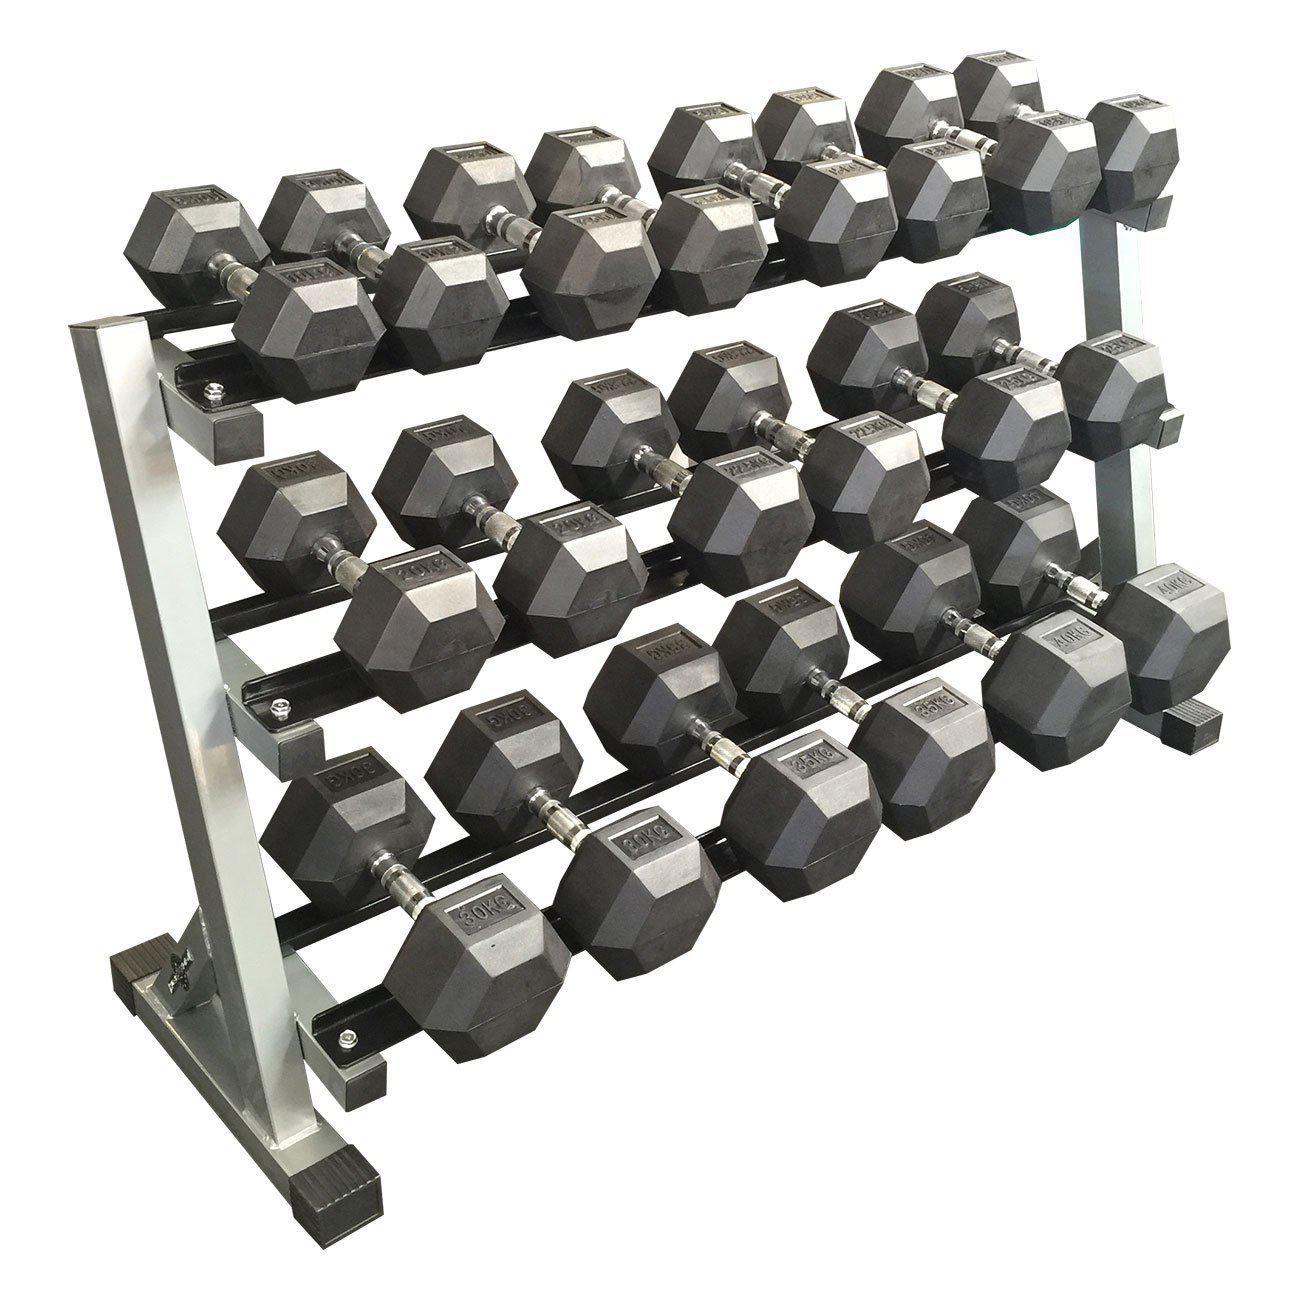 Cheap Rubber Hex dumbbell 10kg - 40kg 3 tier rack _Gym Direct-Rubber Hex Dumbbell Package-Gym Direct